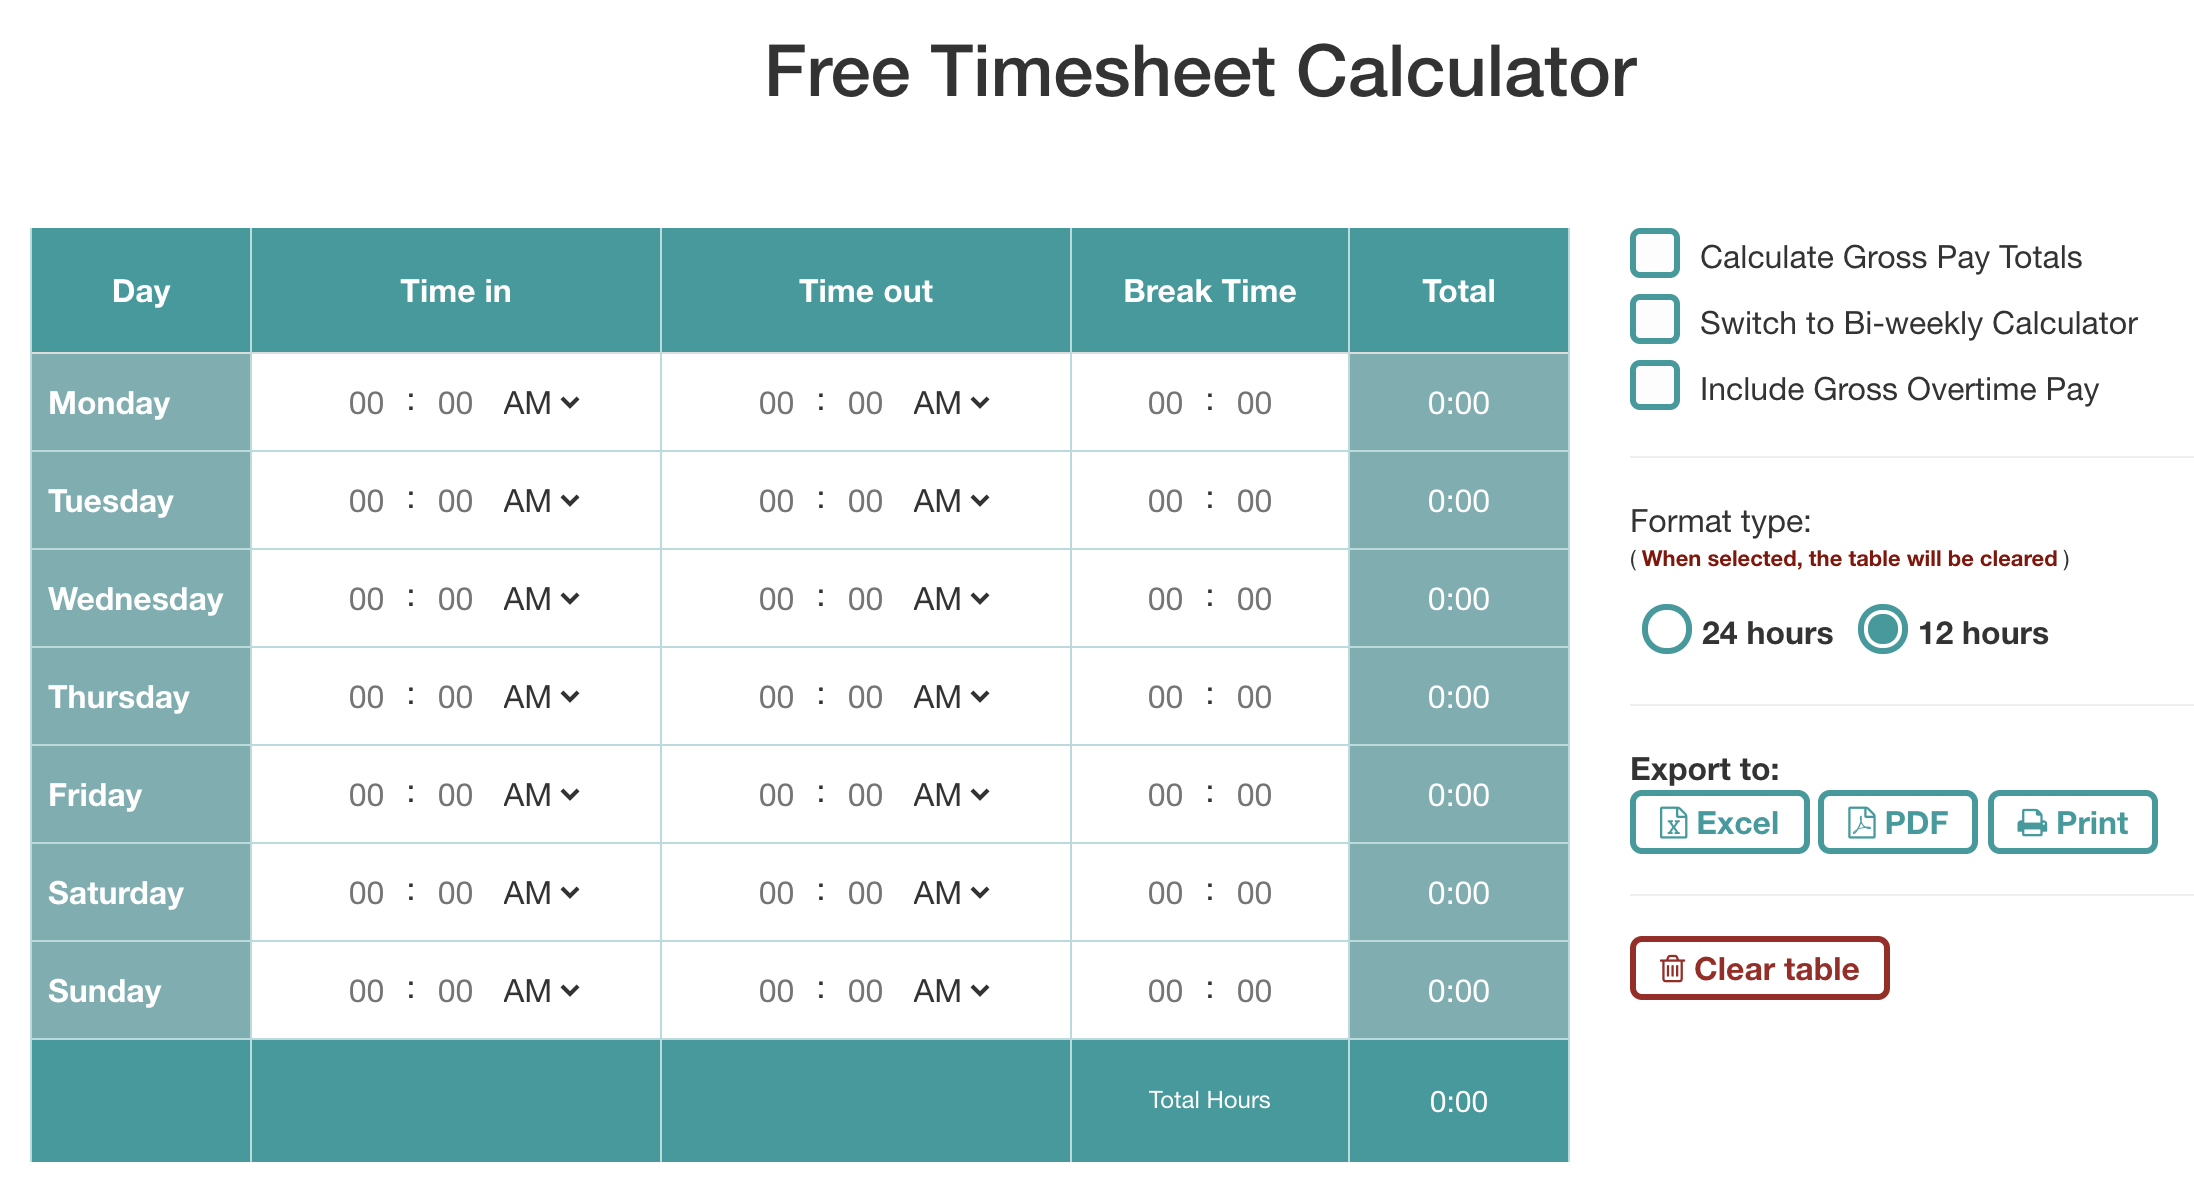 Free Timesheet Calculator